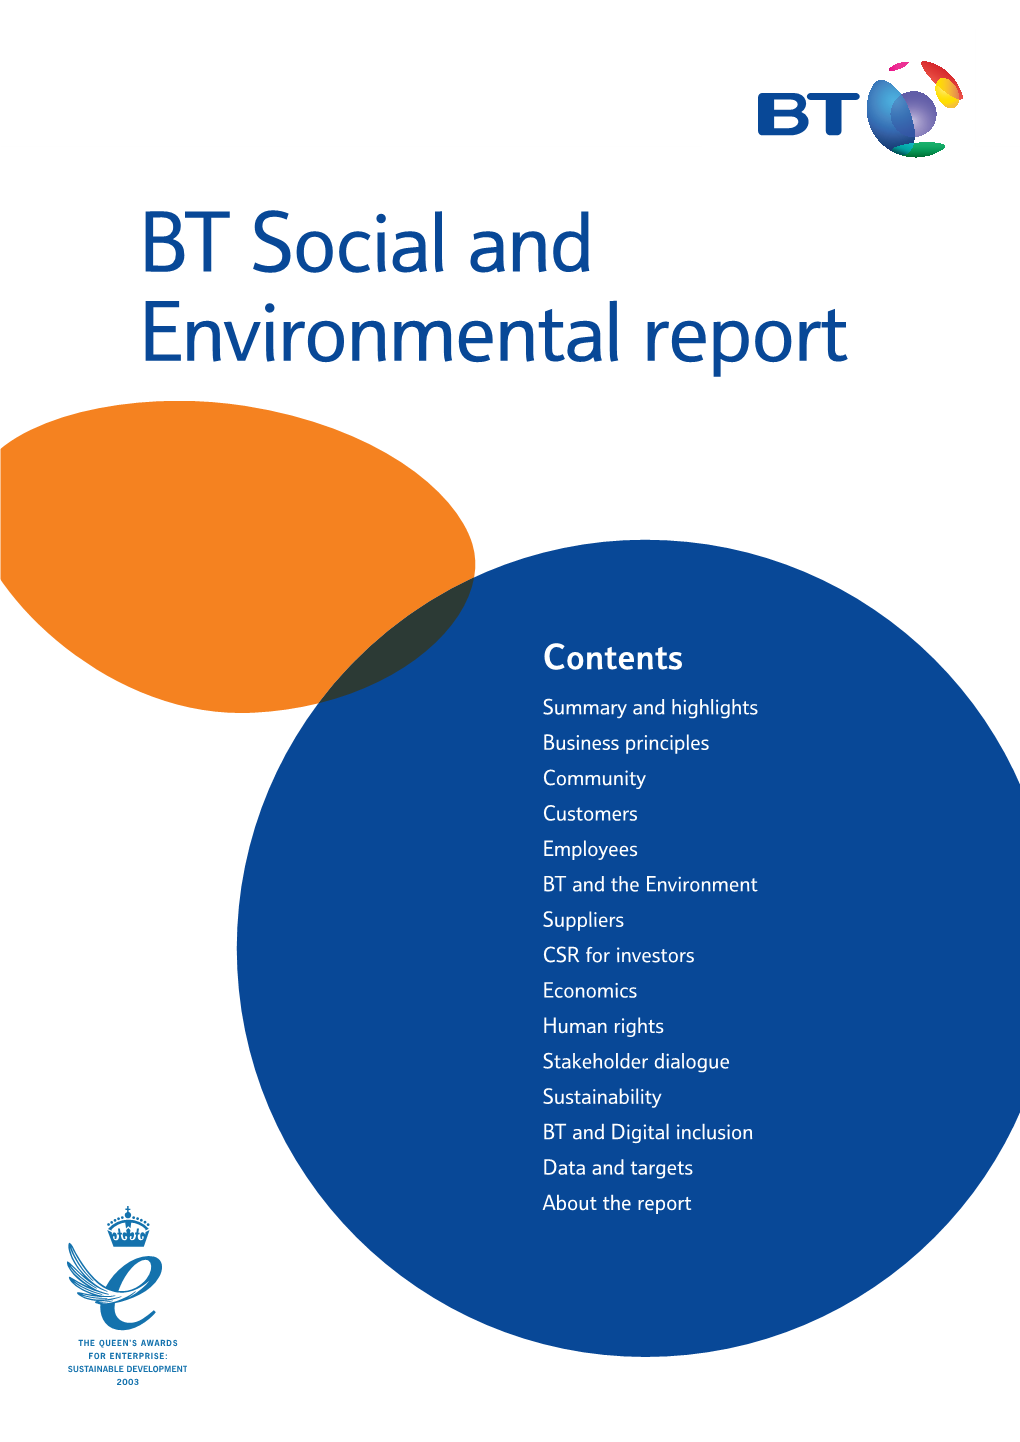 BT Social and Environmental Report